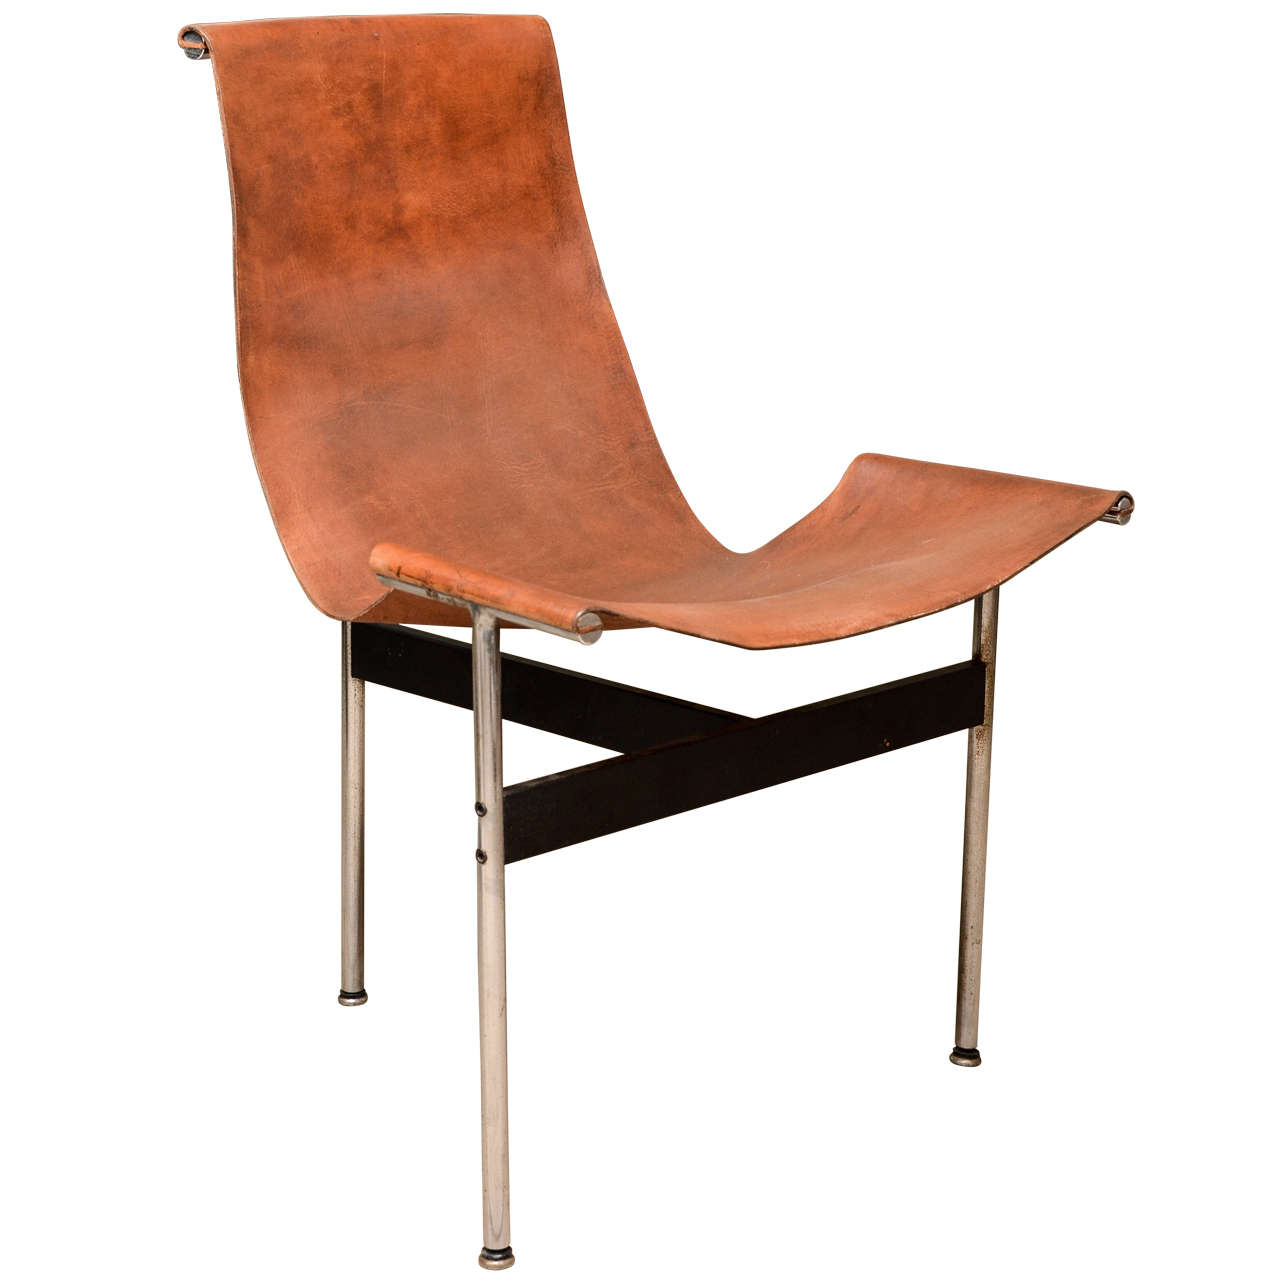 Katavolos Leather Sling "T" Chair at 1stdibs